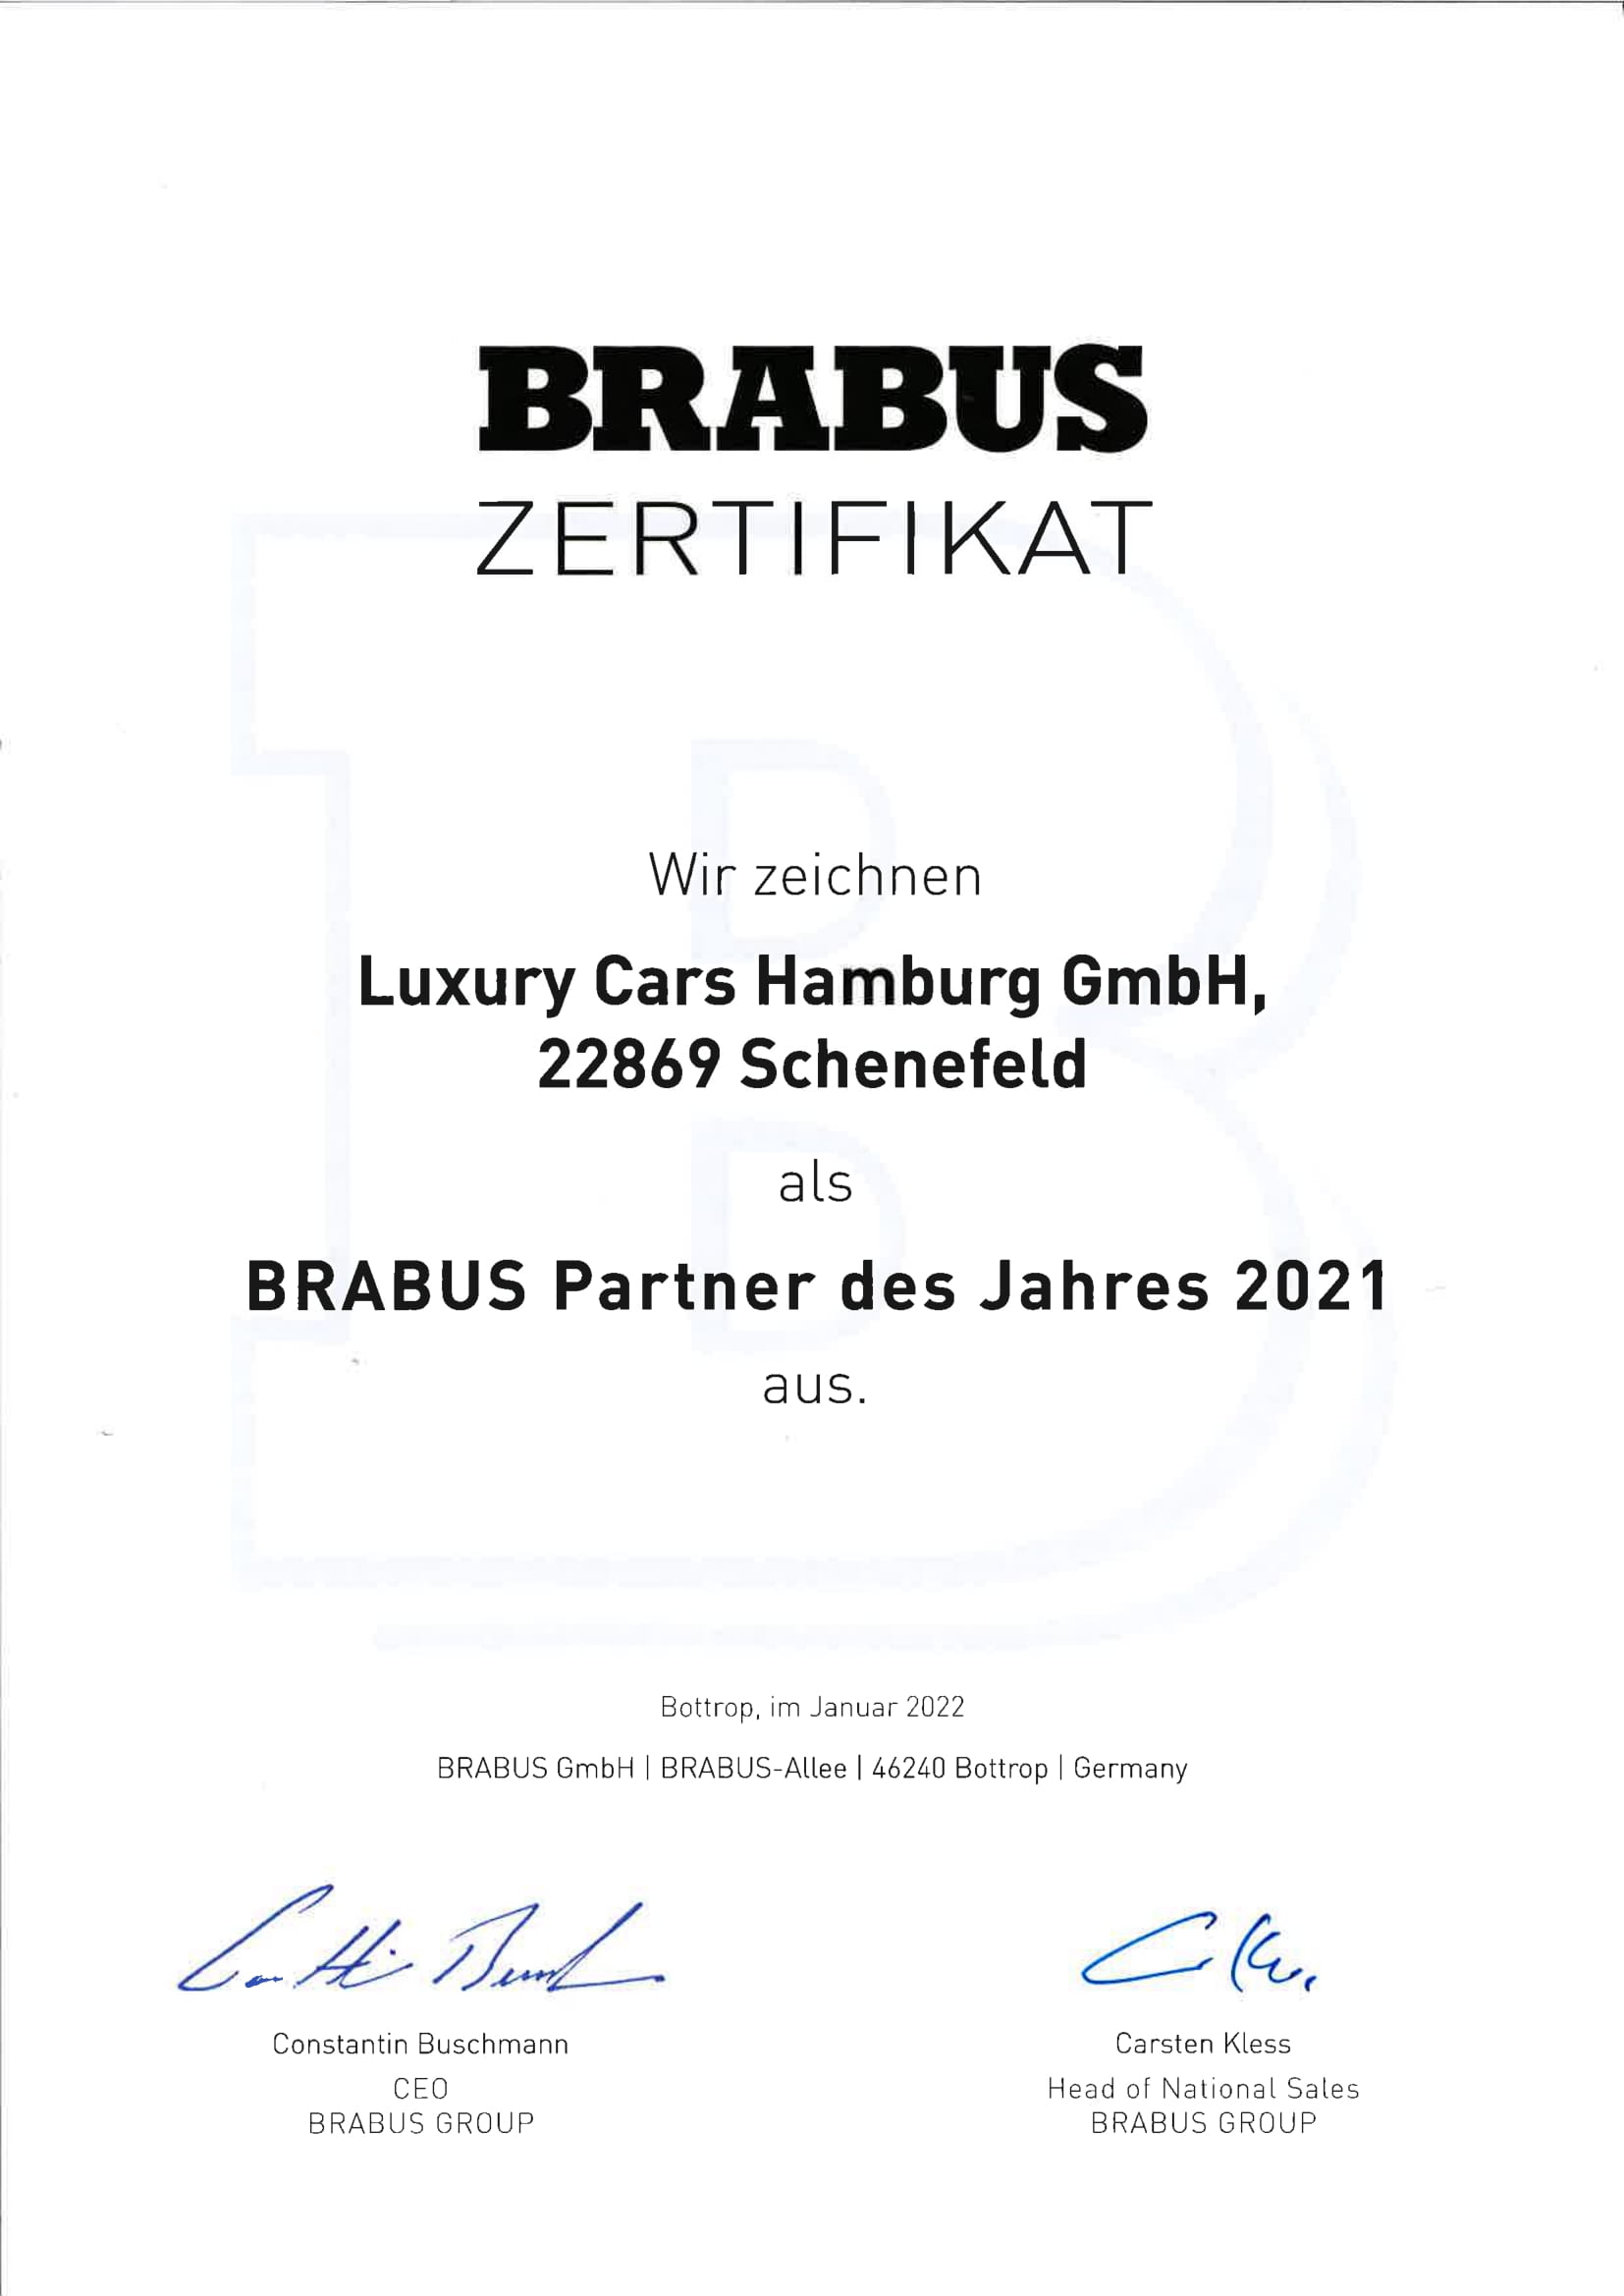 BRABUS partner of the year 2021